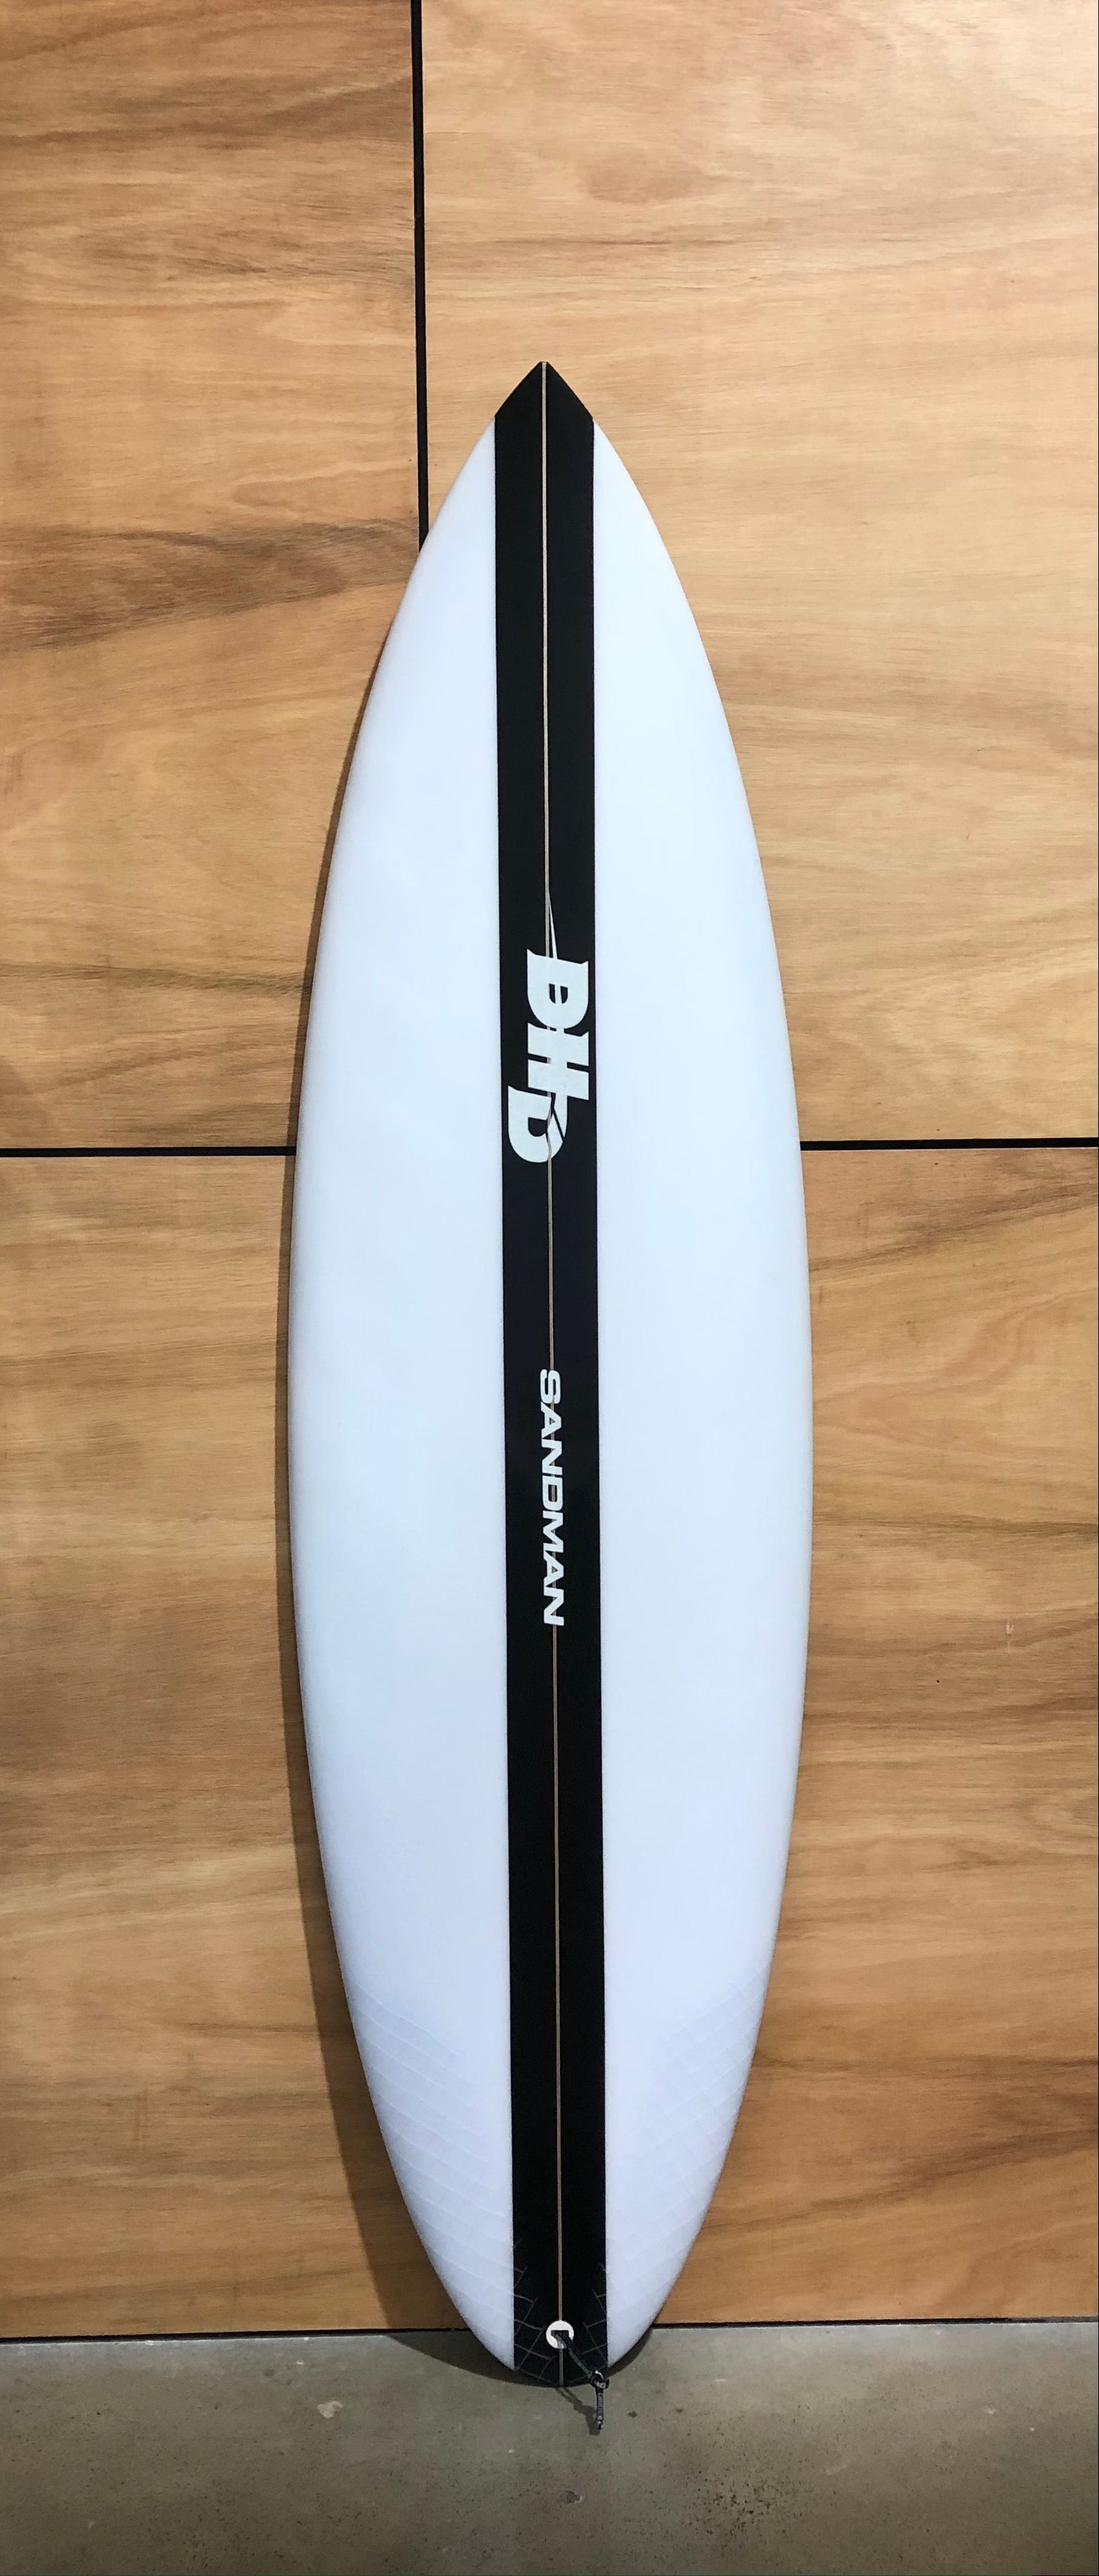 DHD Sandman PU - Board Store DHDSurfboard  